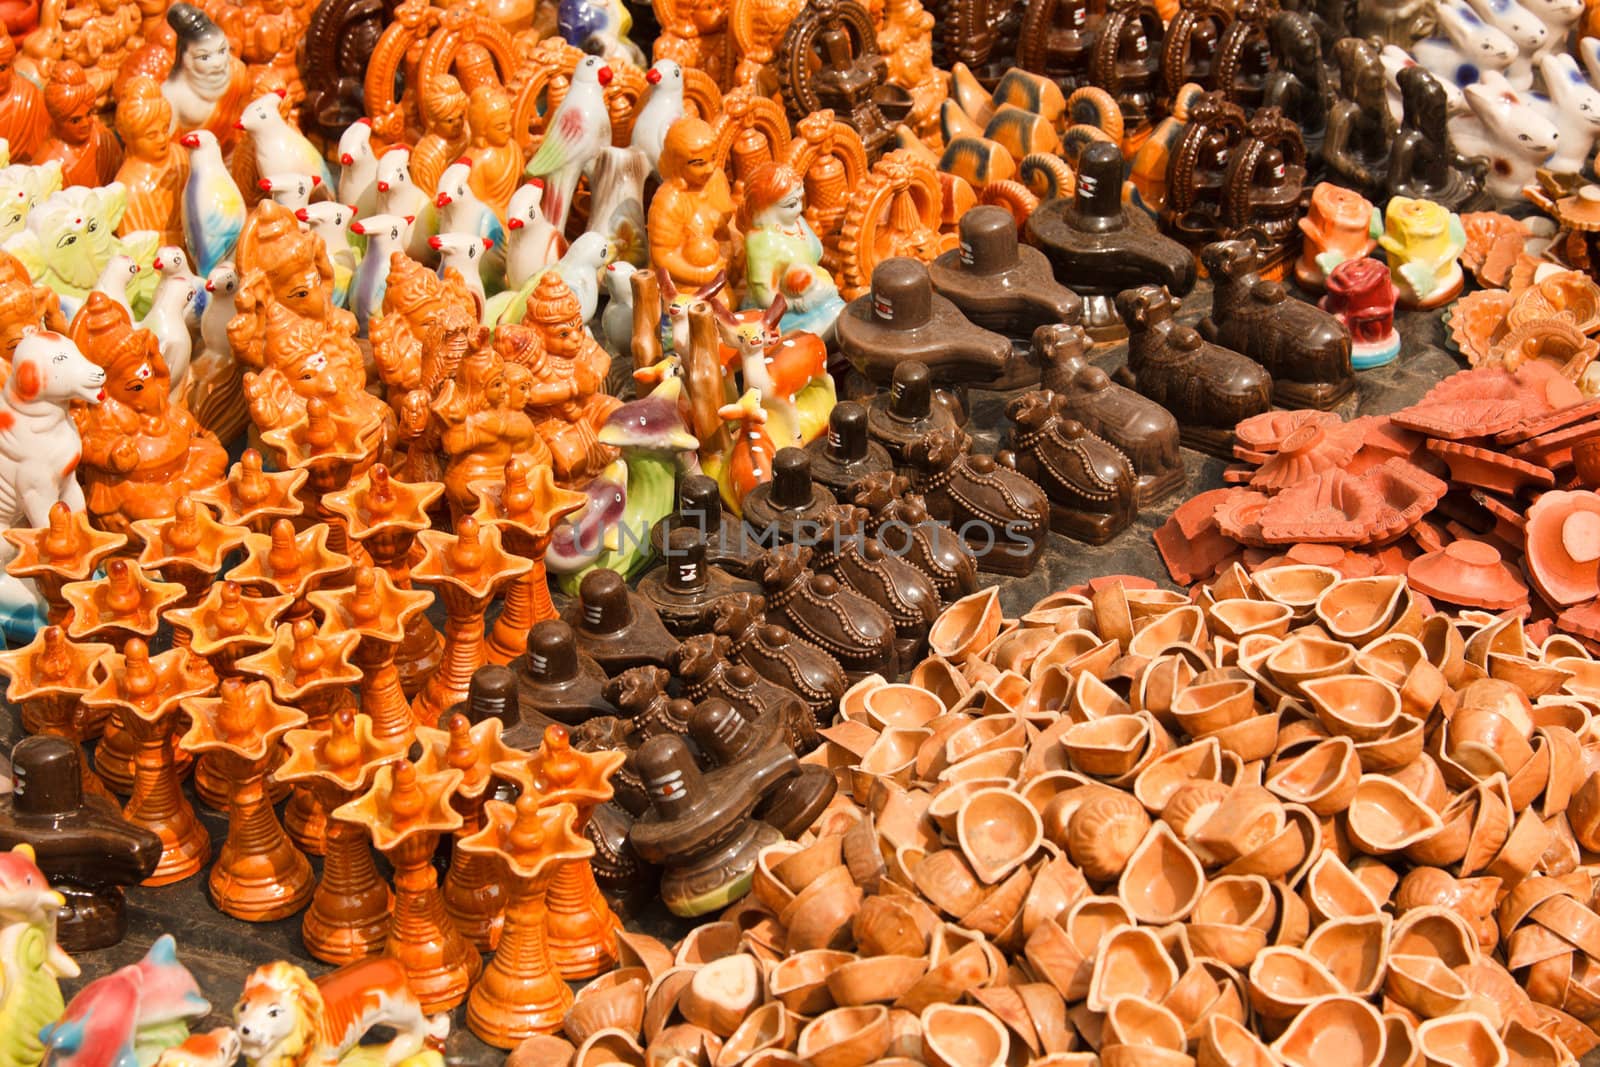 Clay toys and accessories for pooja (temple worship). Tiruvannamalai, Tamil Nadu, India